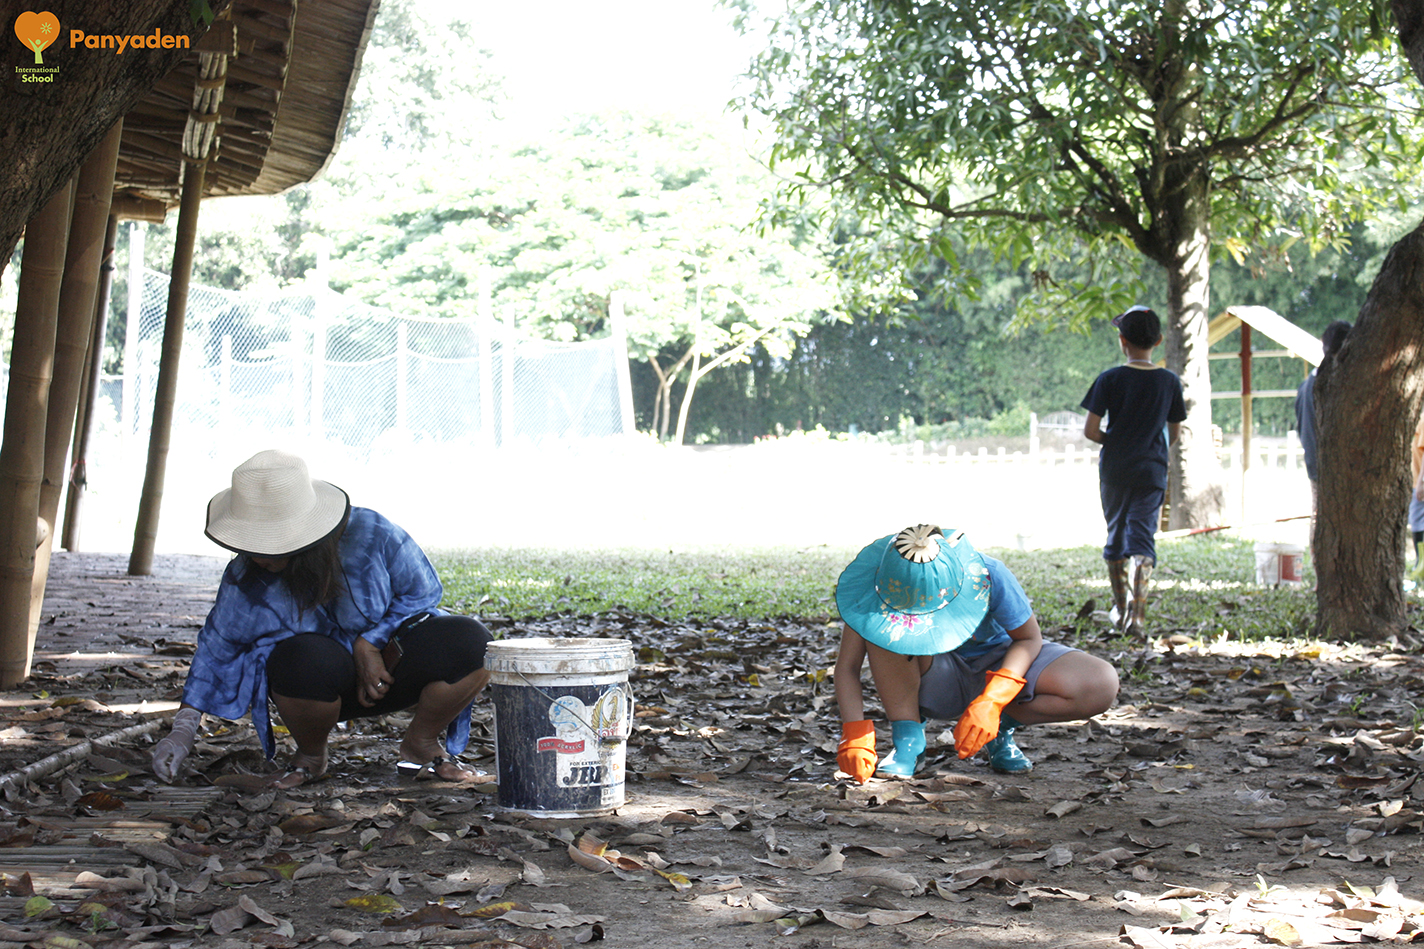 Student cleanup, rebuild Panyaden effort